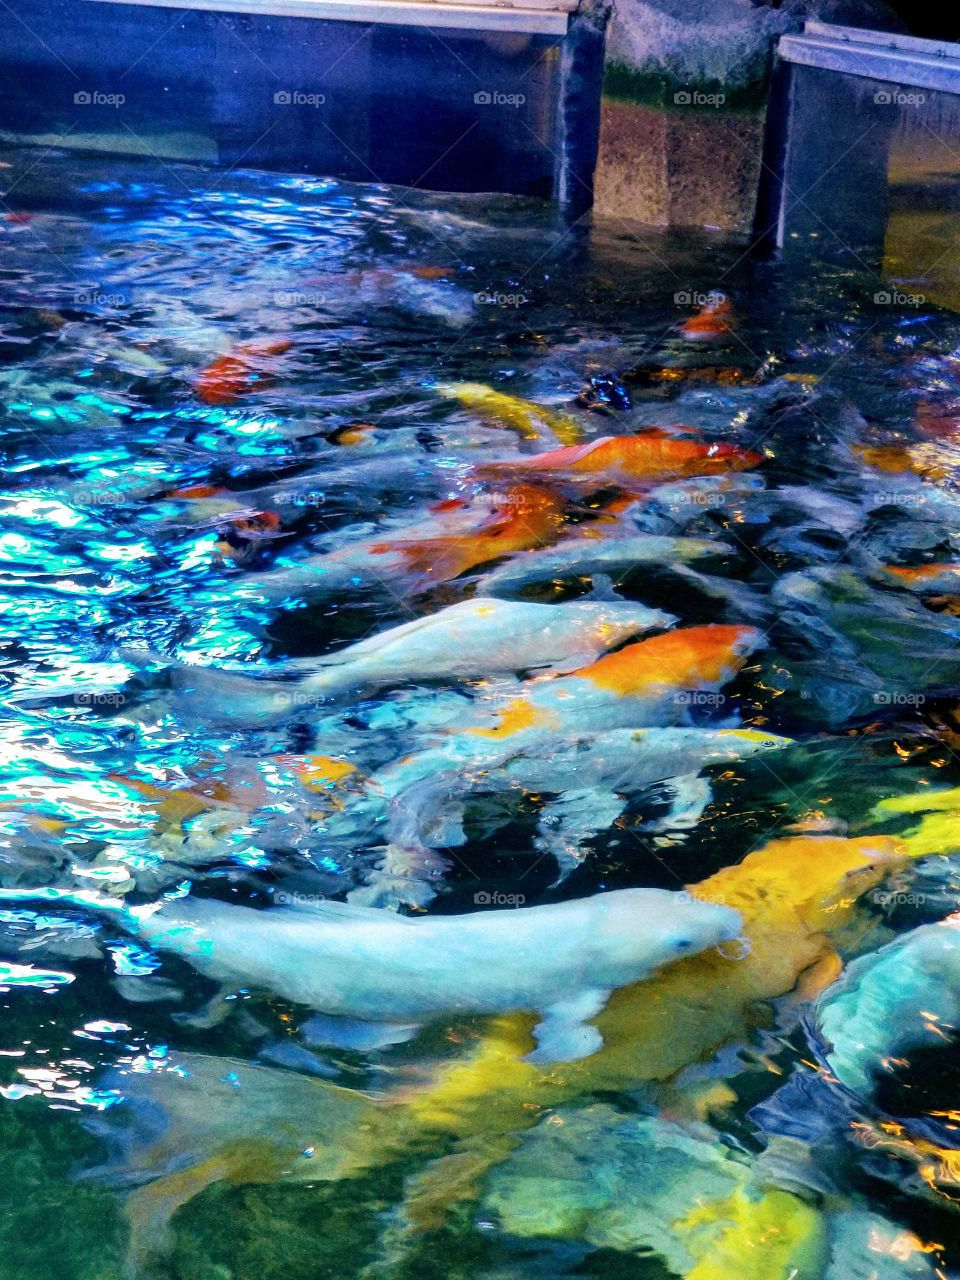 Coy fish at Austin Aquarium wait to be fed